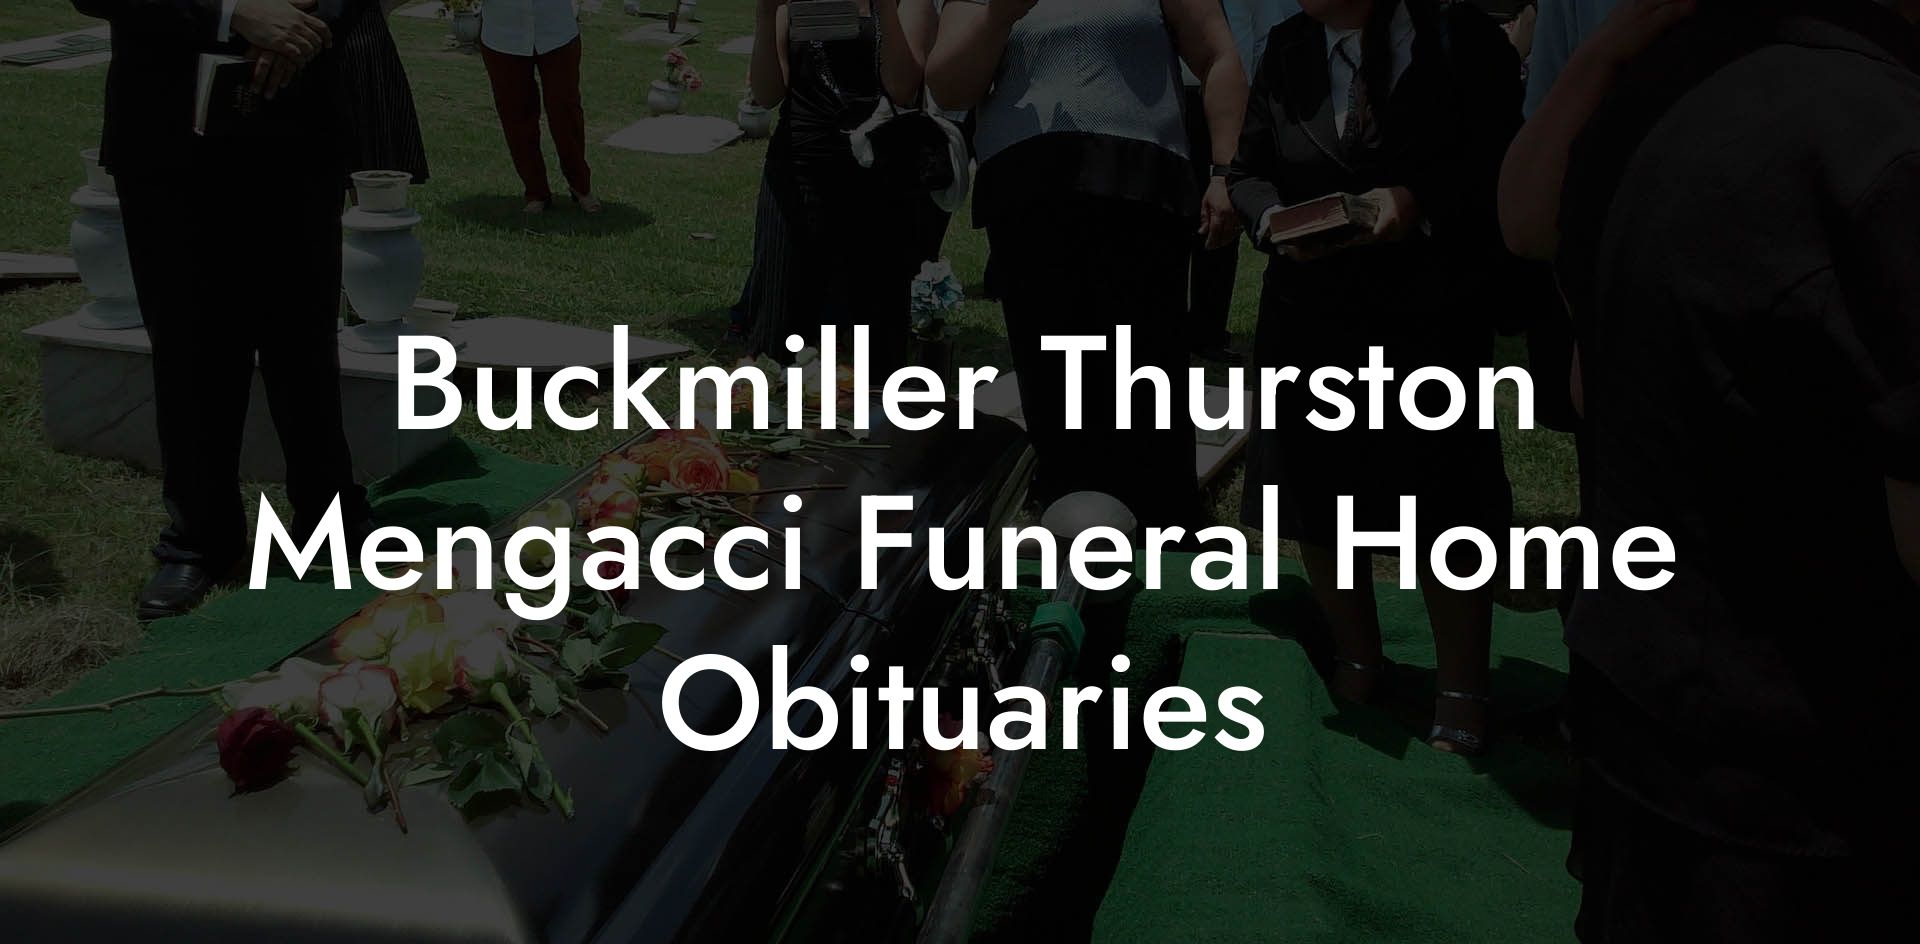 Buckmiller Thurston Mengacci Funeral Home Obituaries